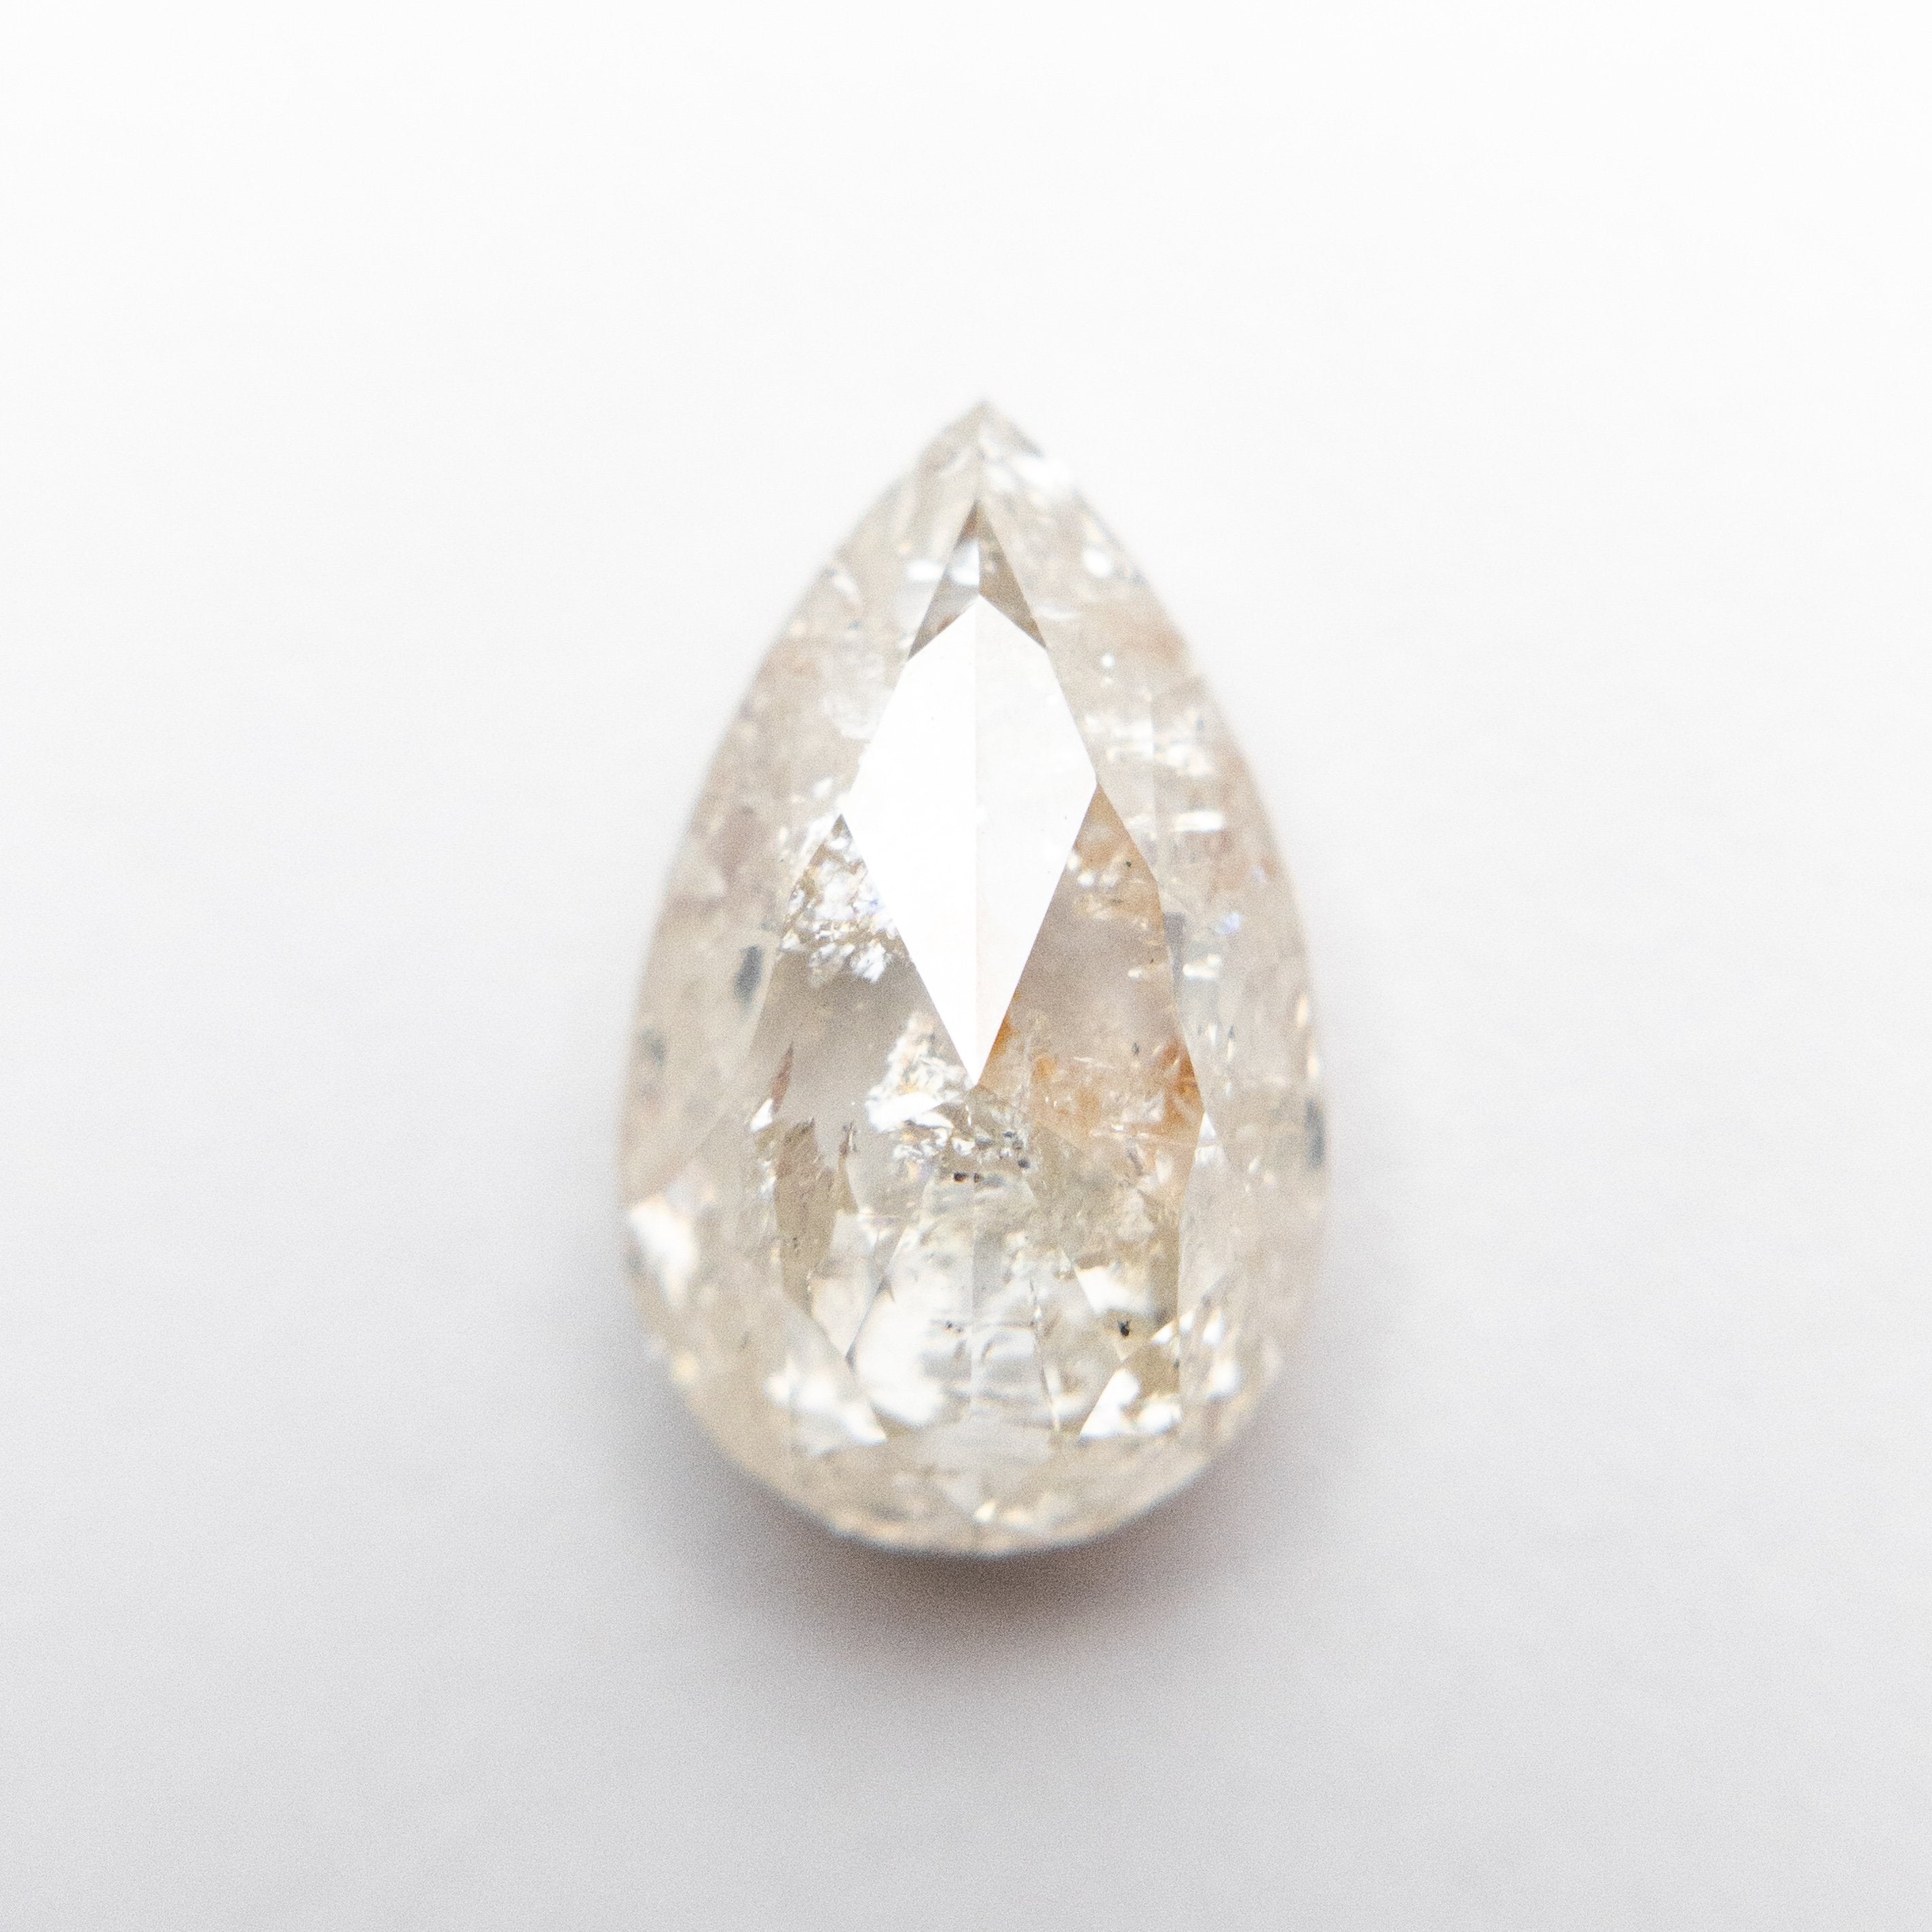 2.33ct 10.69x6.61x4.07mm Pear Double Cut 18770-07 HOLD D2809 - Misfit Diamonds